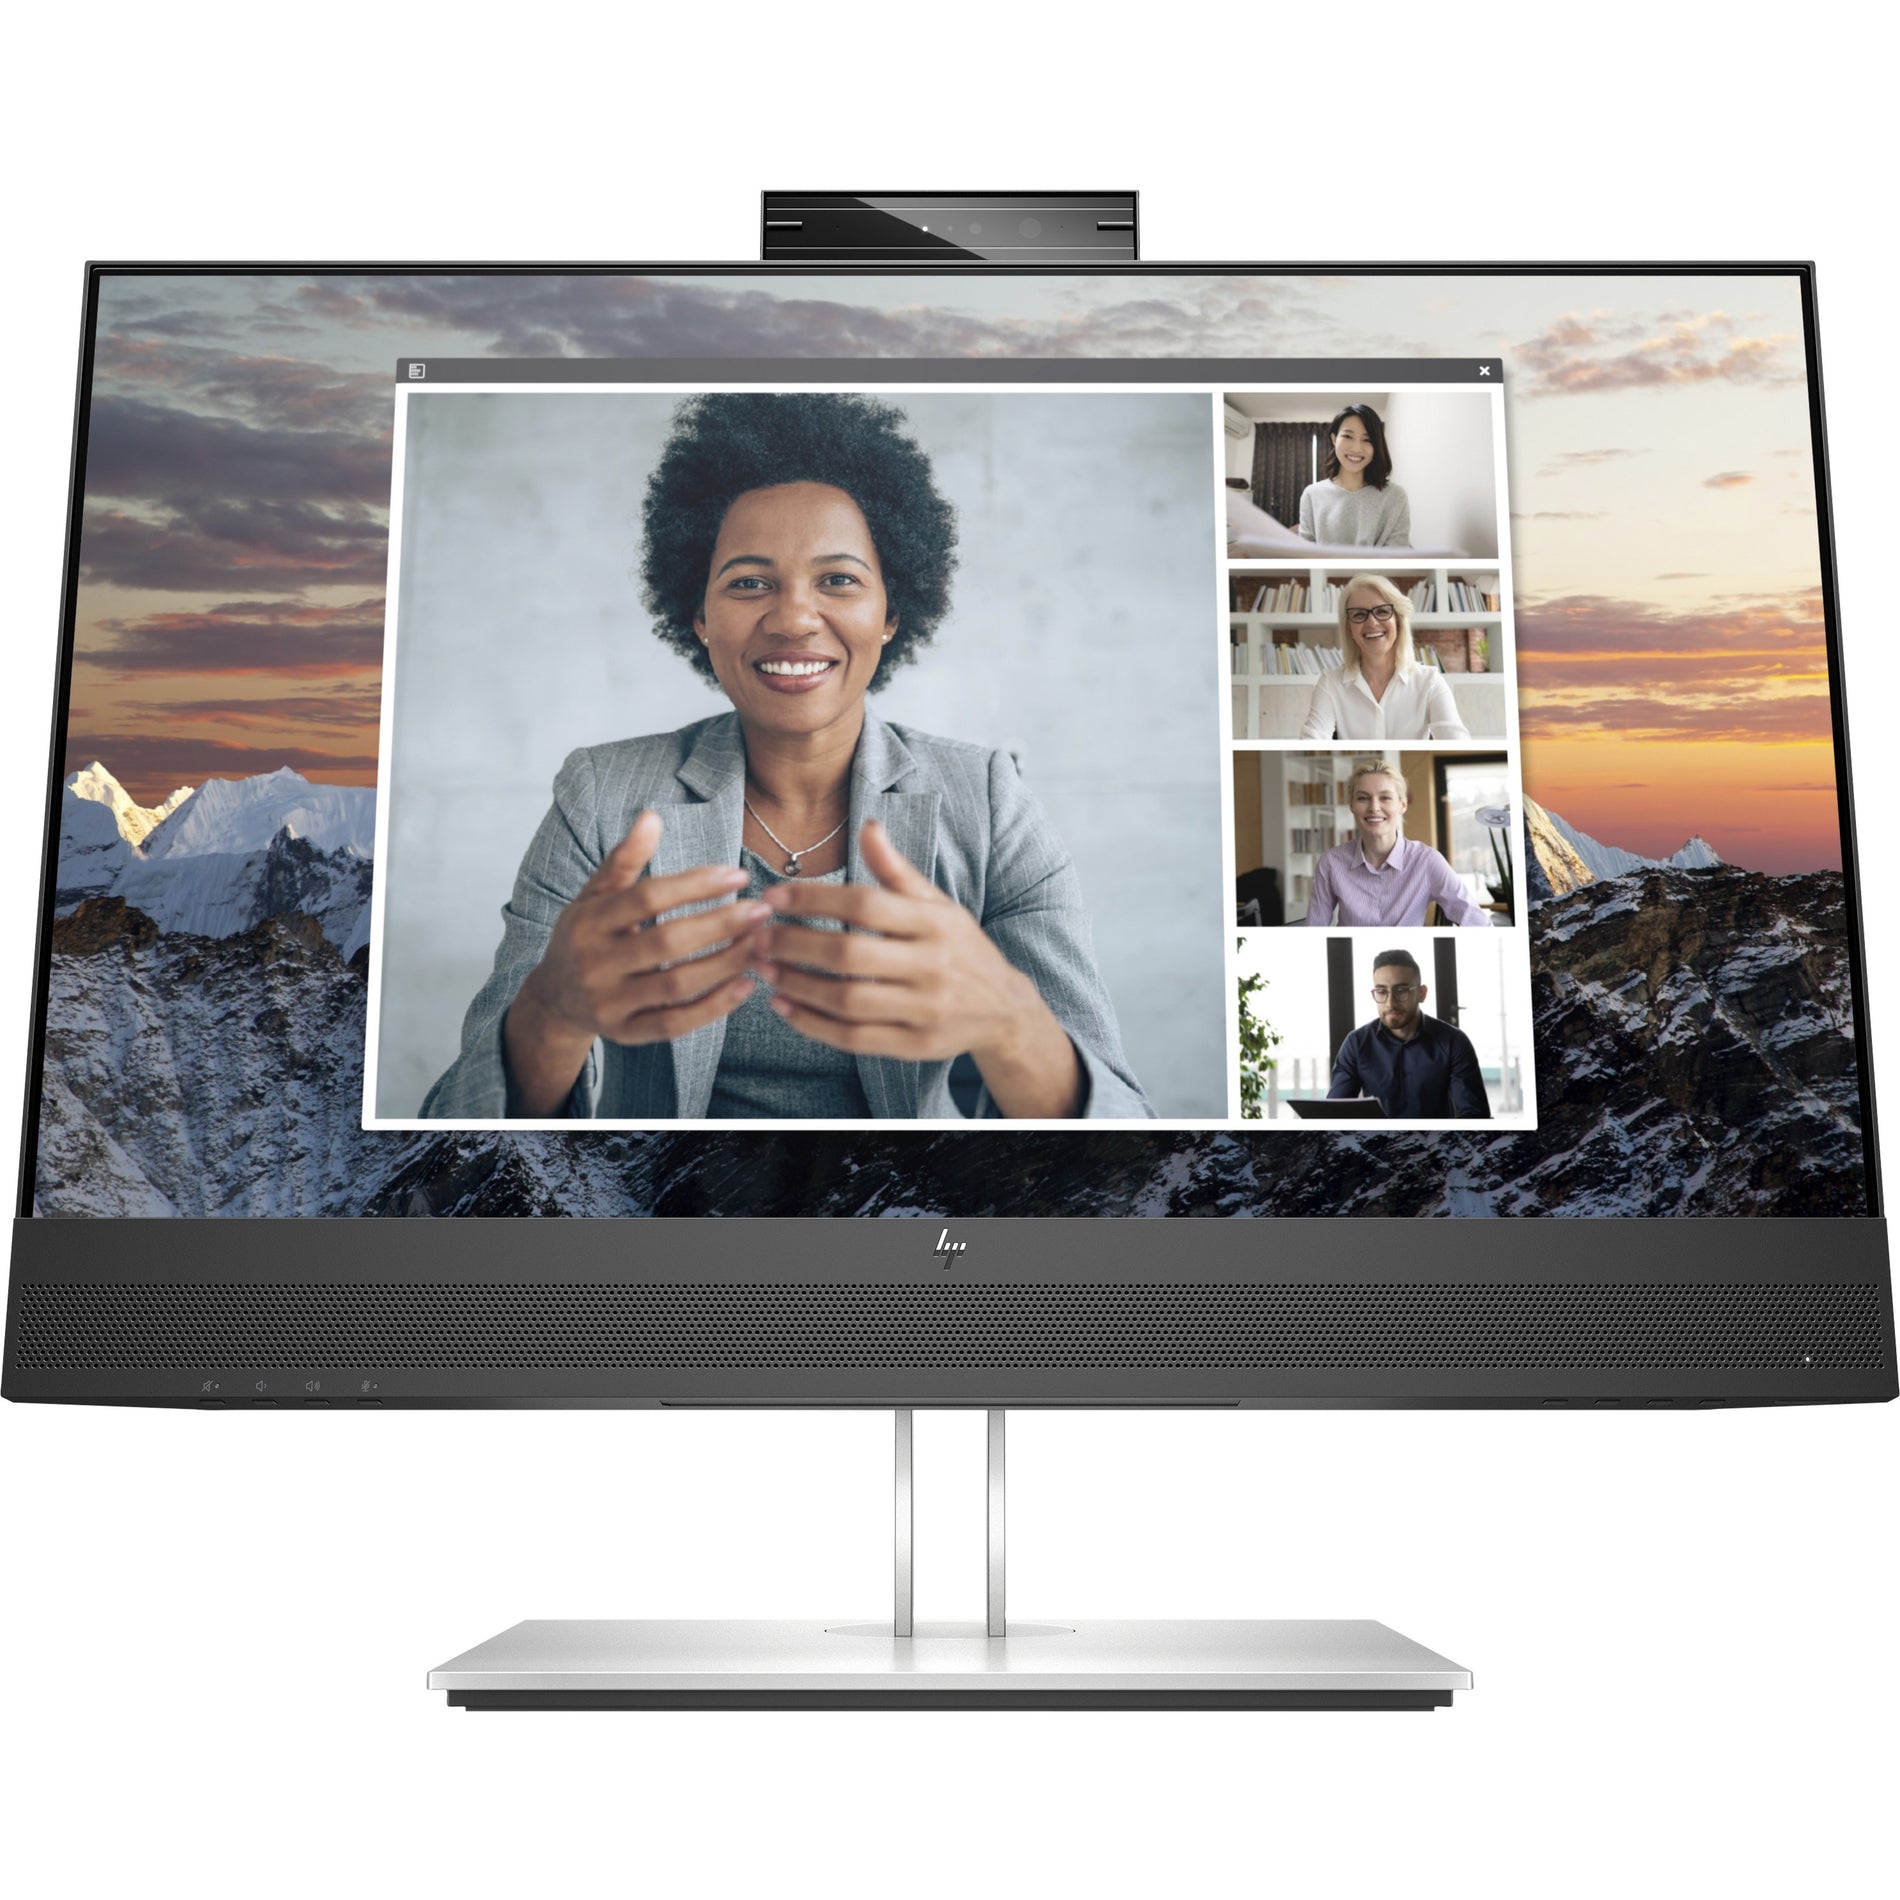 HP E24m G4 FHD USB-C Conferencing Monitor, 23.8" Webcam Full HD LCD Monitor